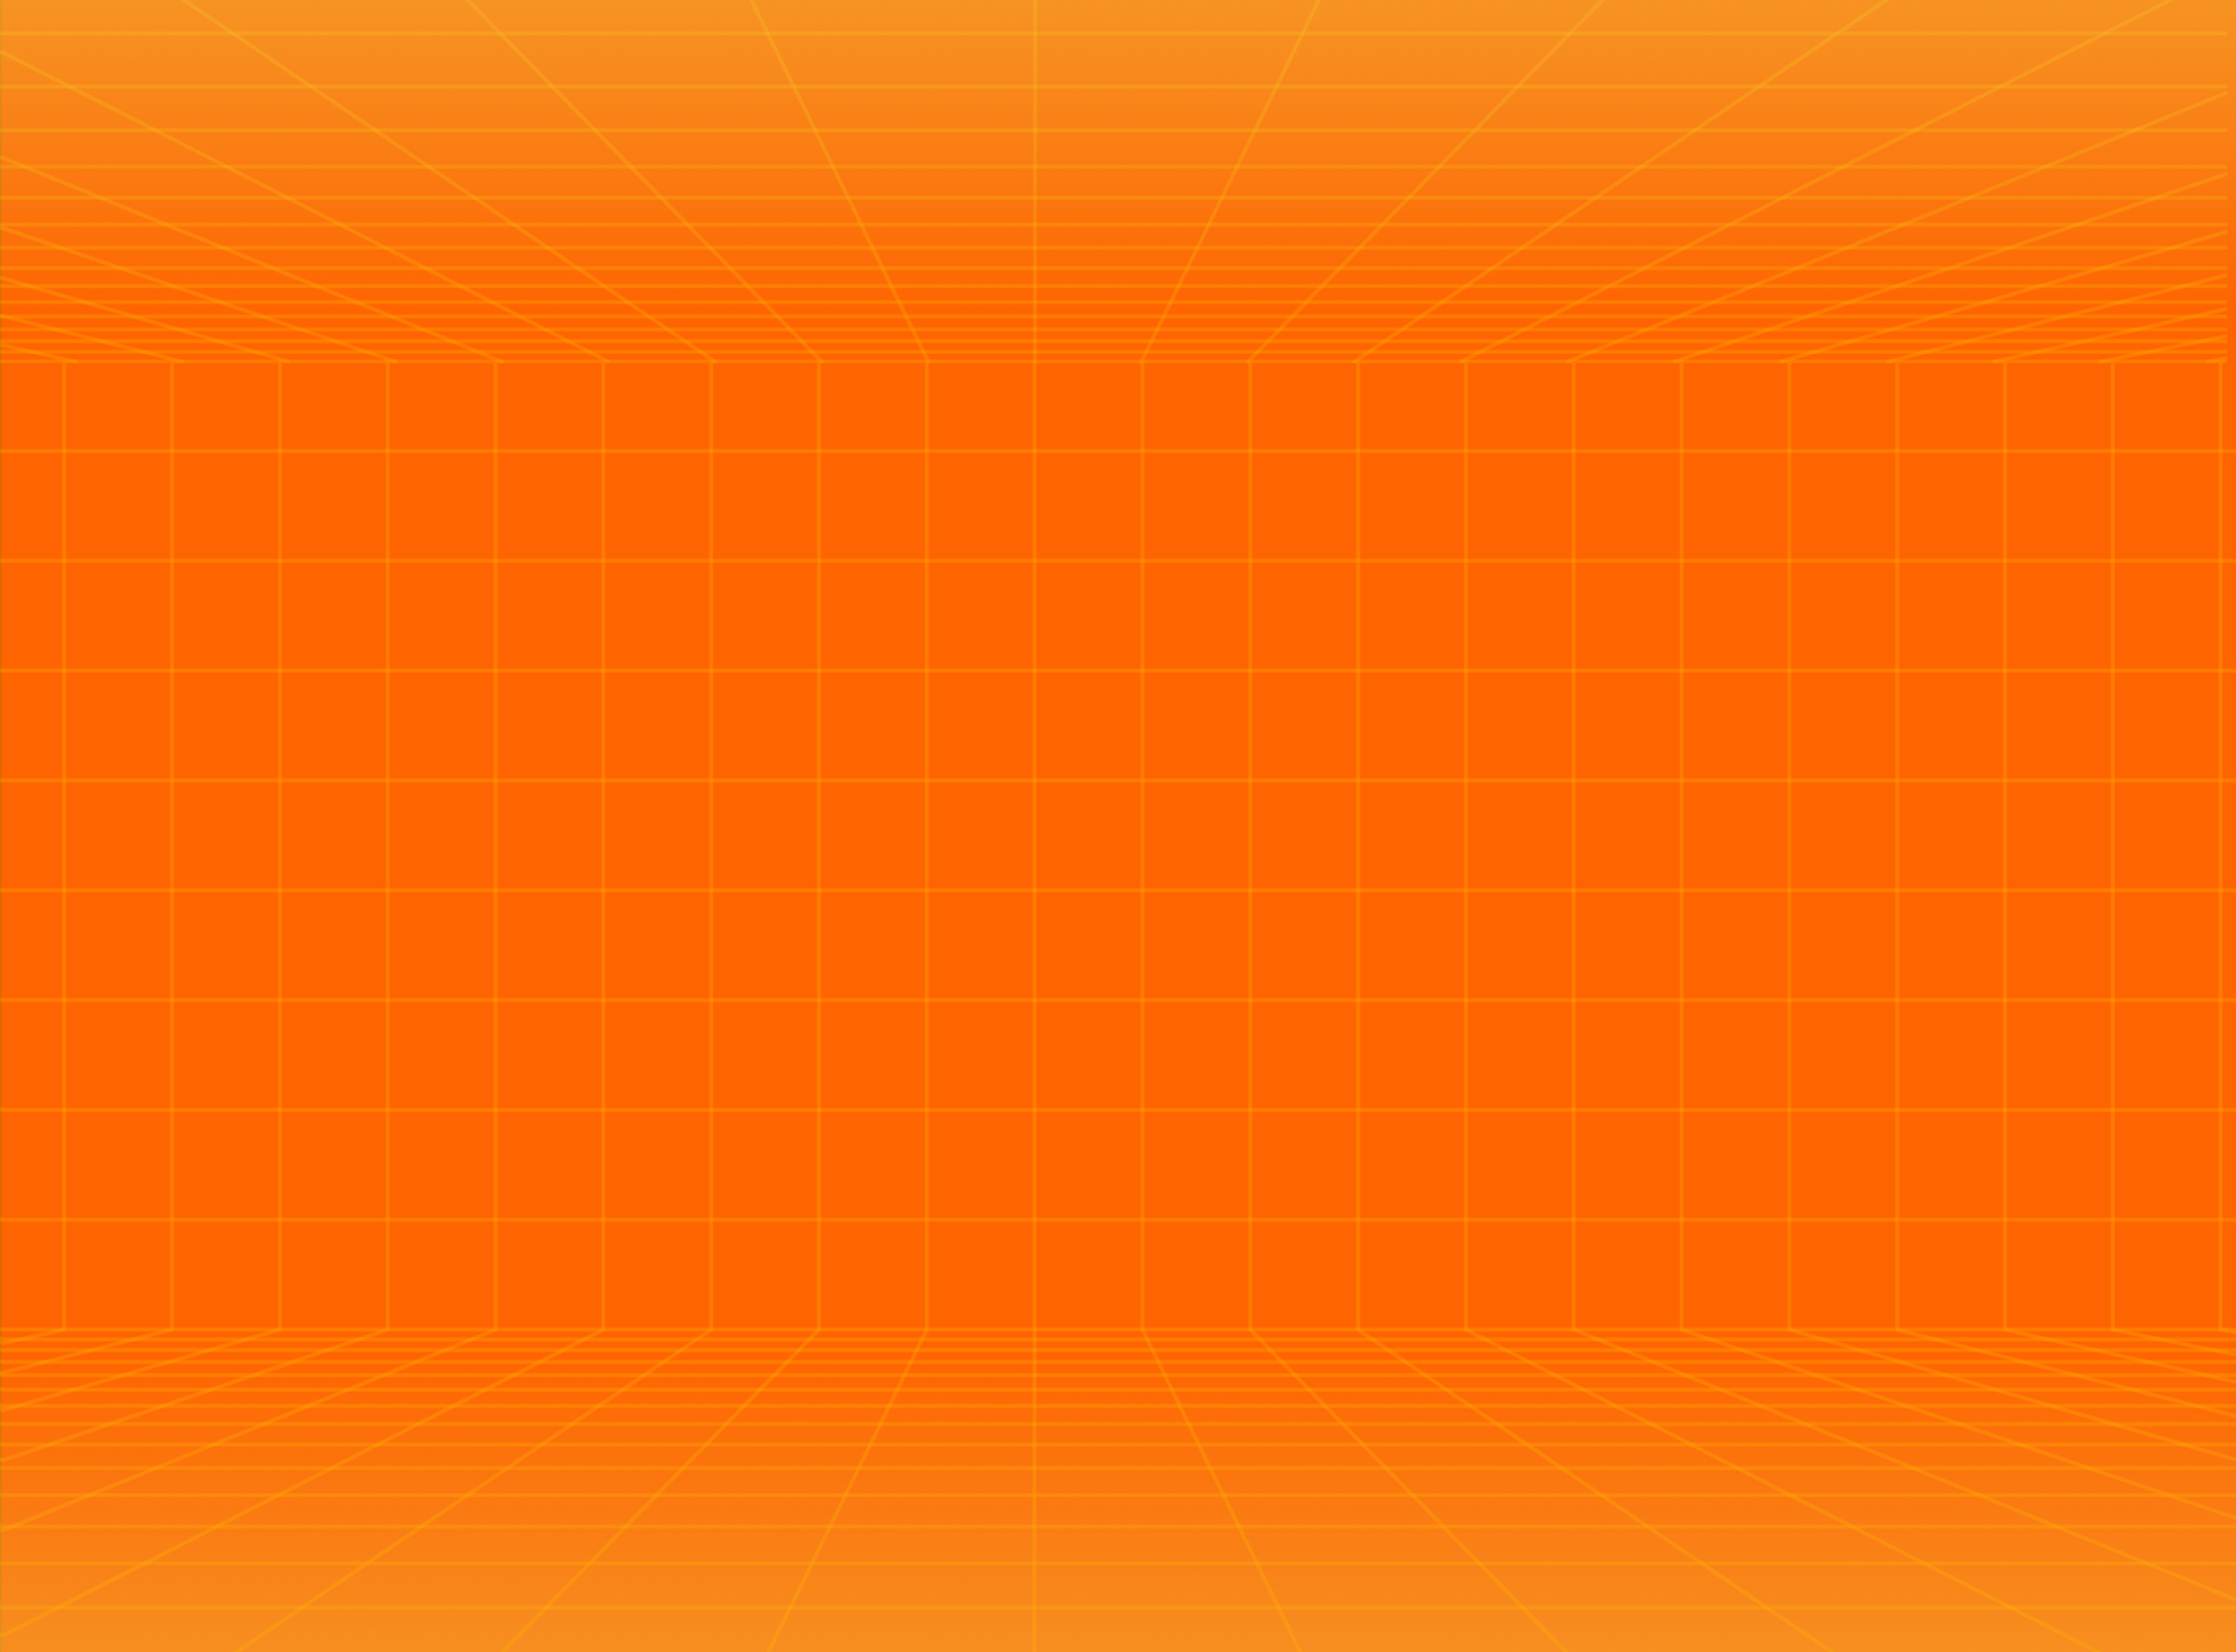 Orange grid background